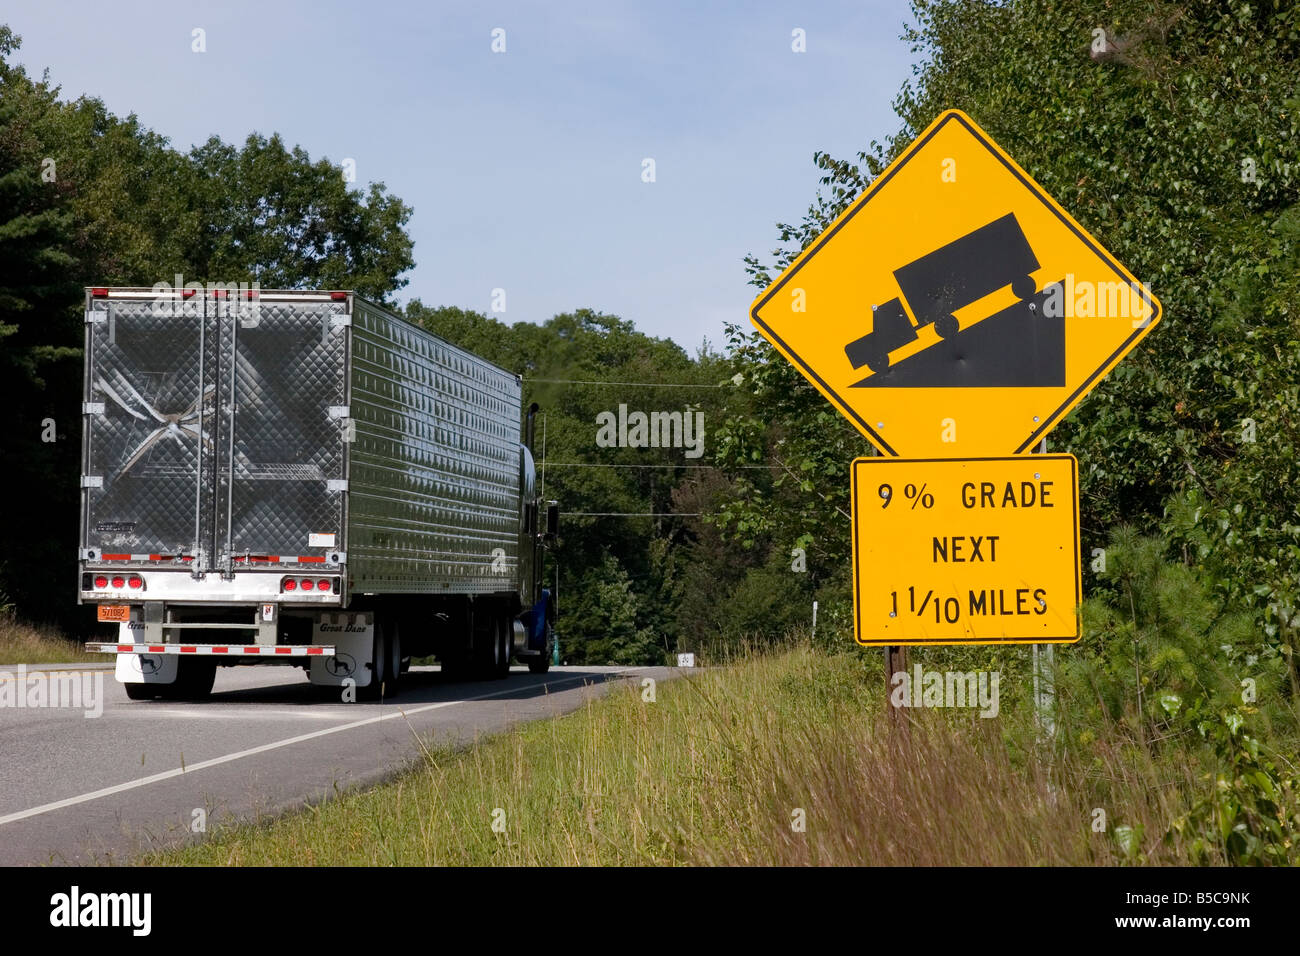 Why is USA road signage so terrible? - Road Trips Forum - TripAdvisor1300 x 956